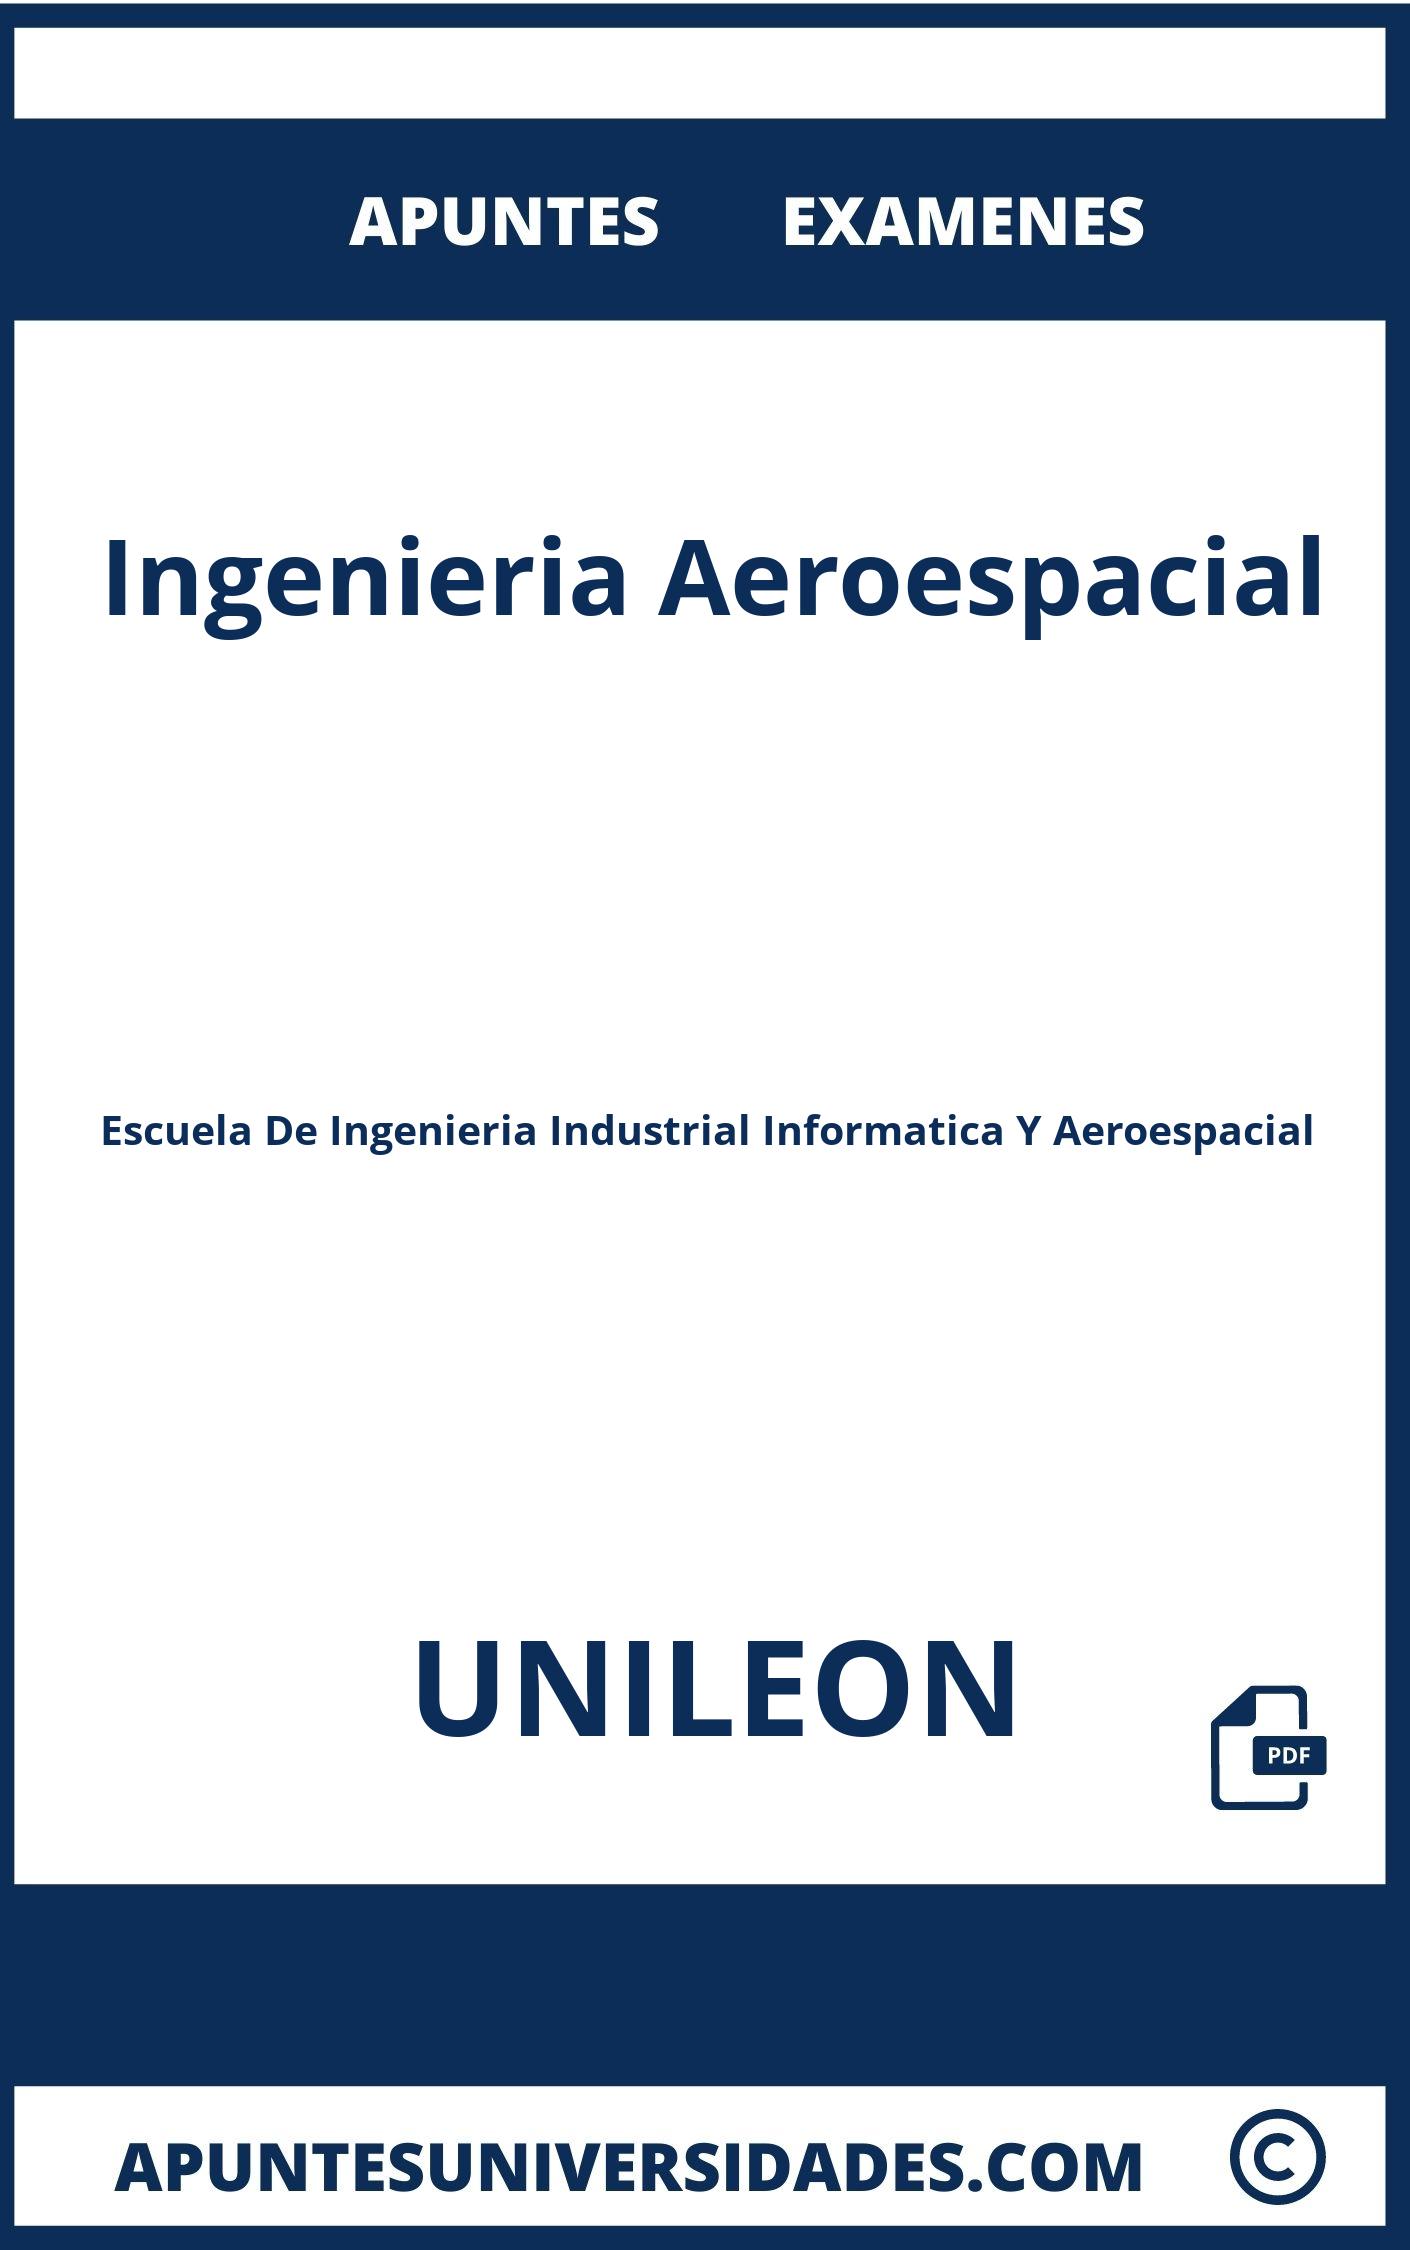 Ingenieria Aeroespacial UNILEON Examenes Apuntes